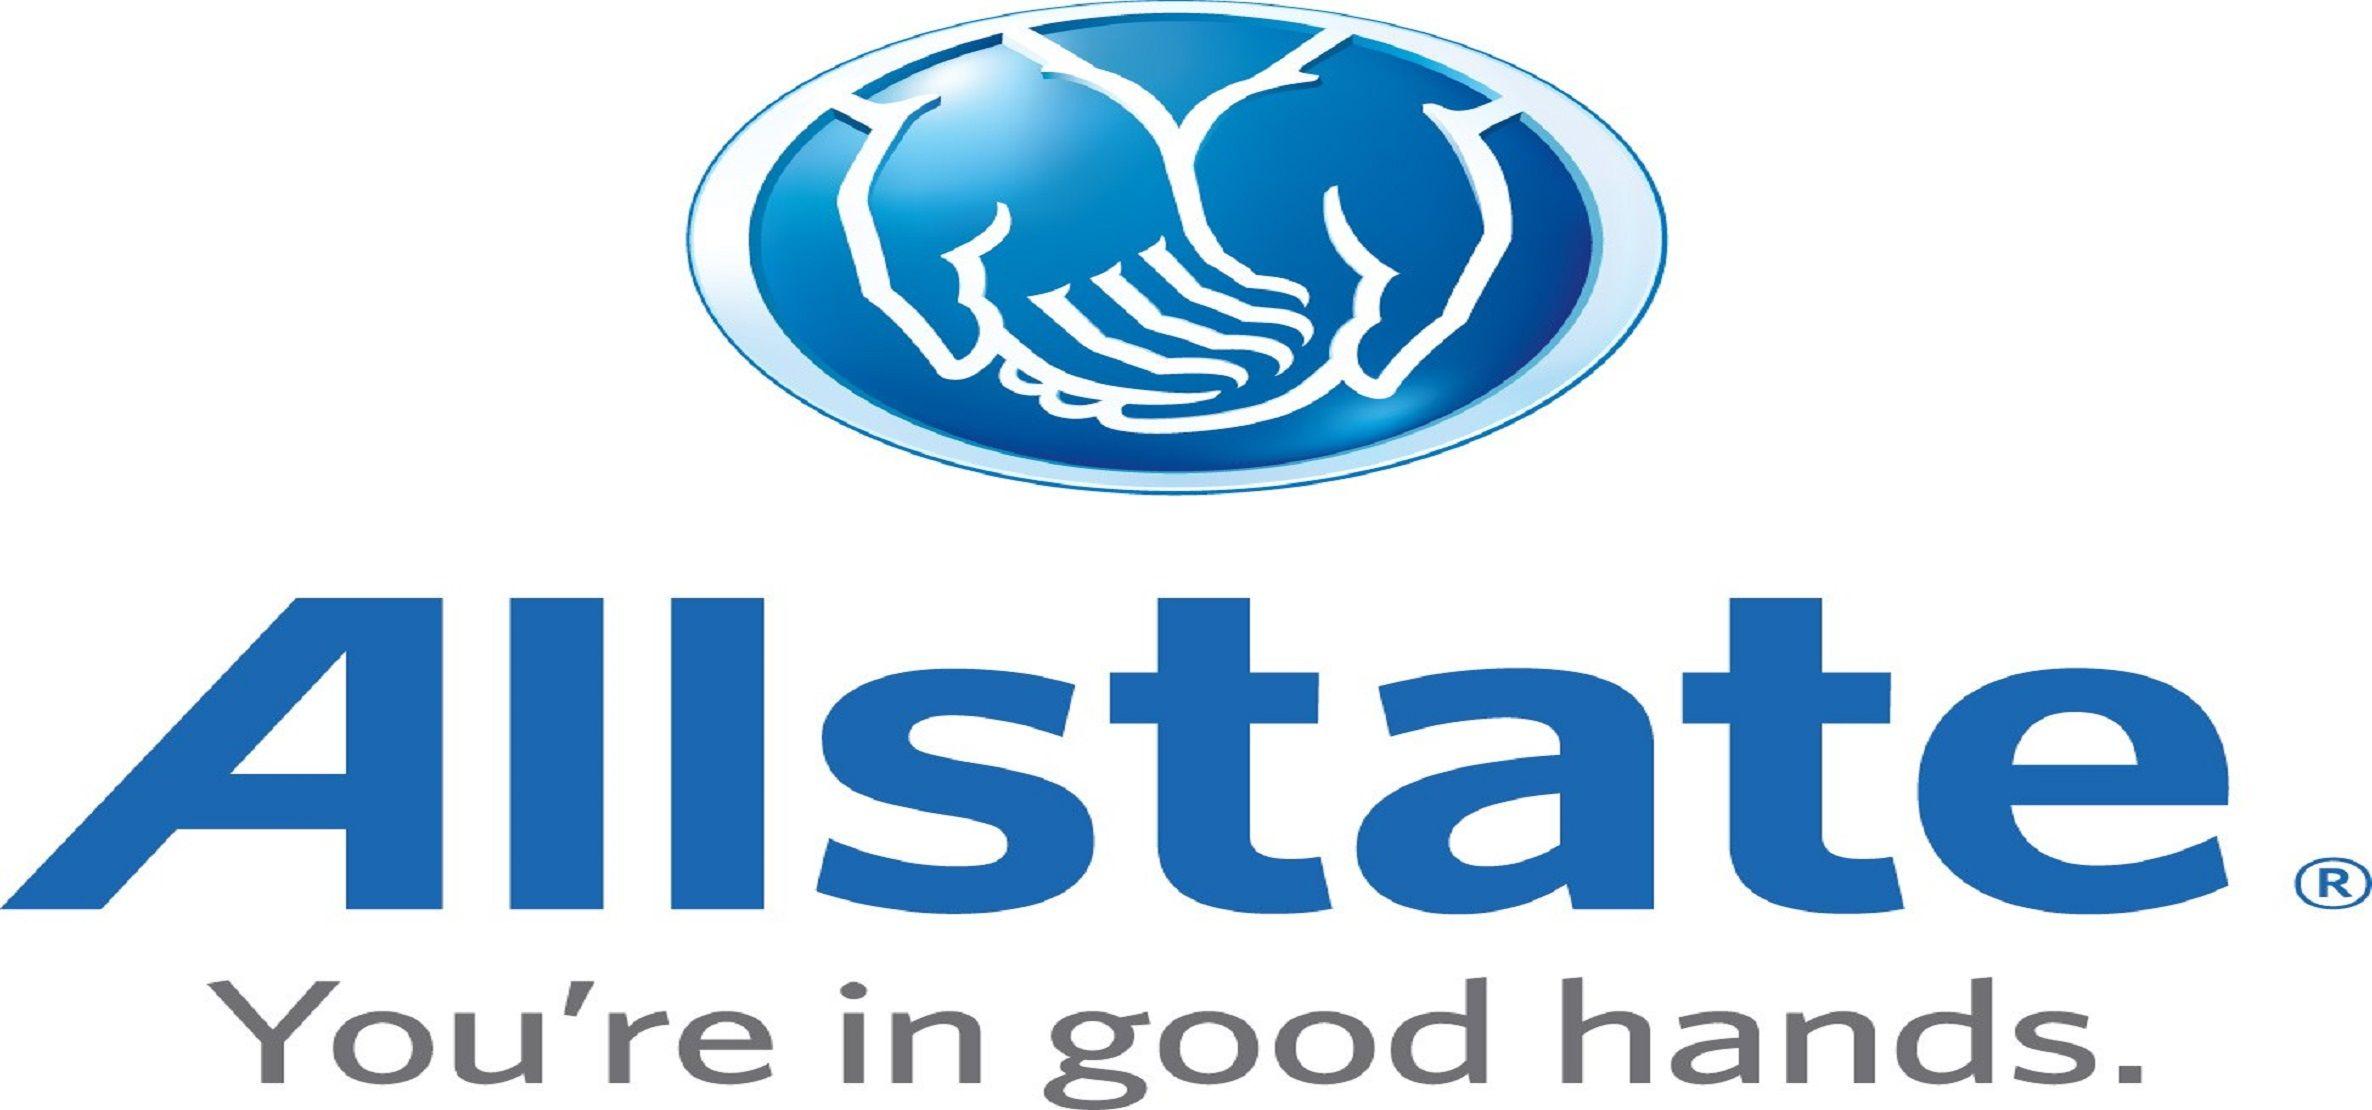 Allstate Logo - Allstate hands Logos